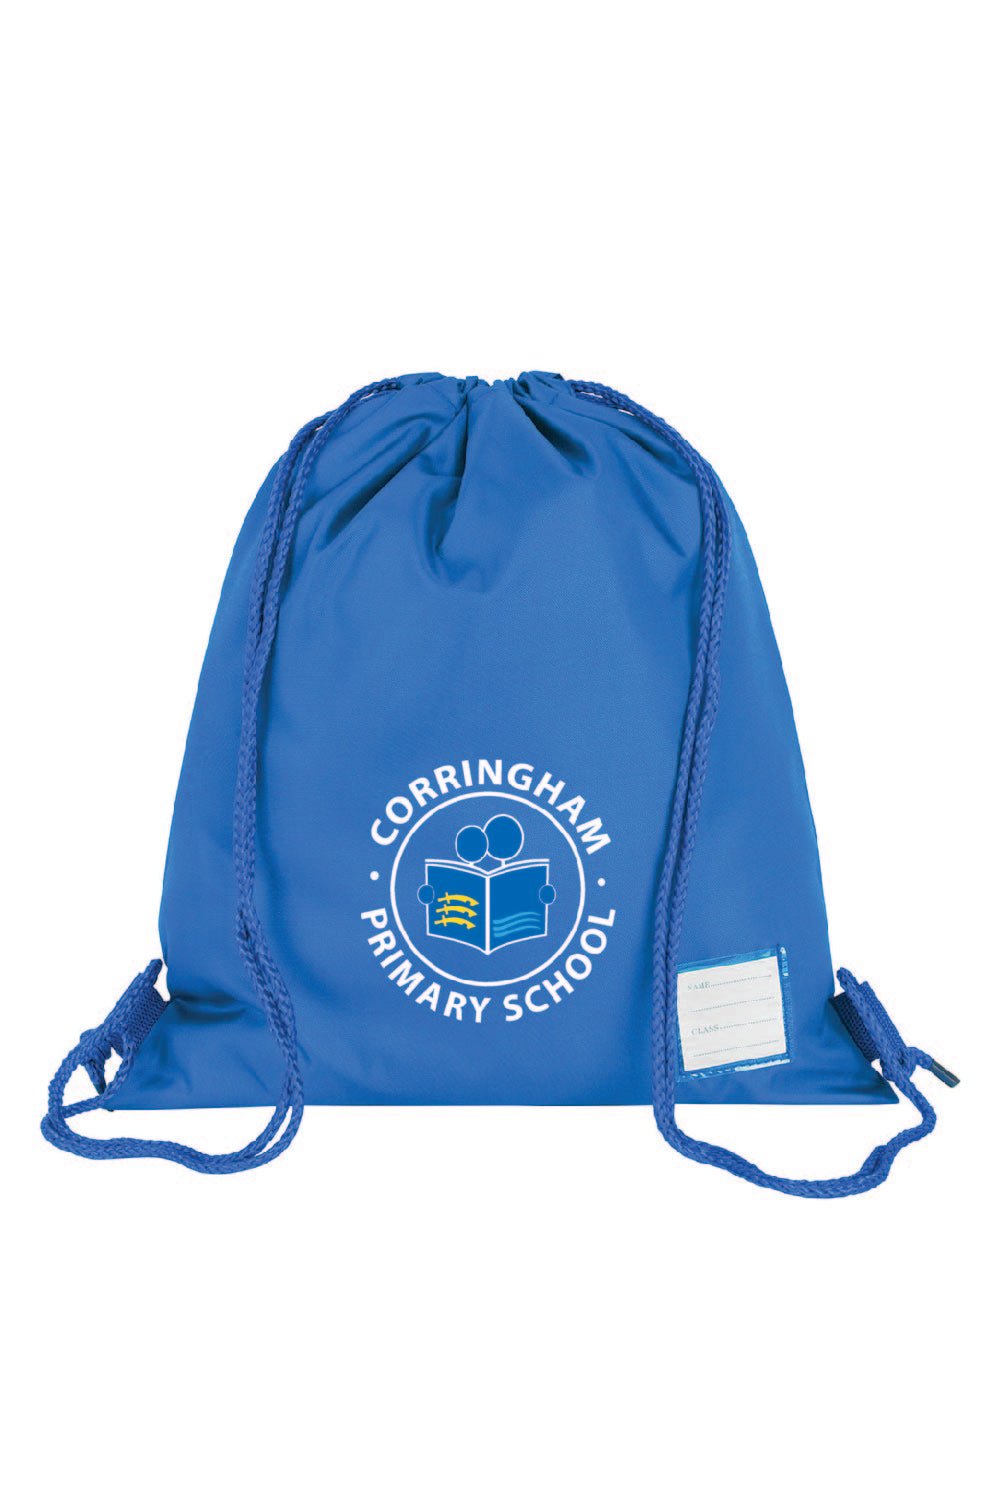 Corringham Primary PE Bag with personalisation - Uniformwise Schoolwear